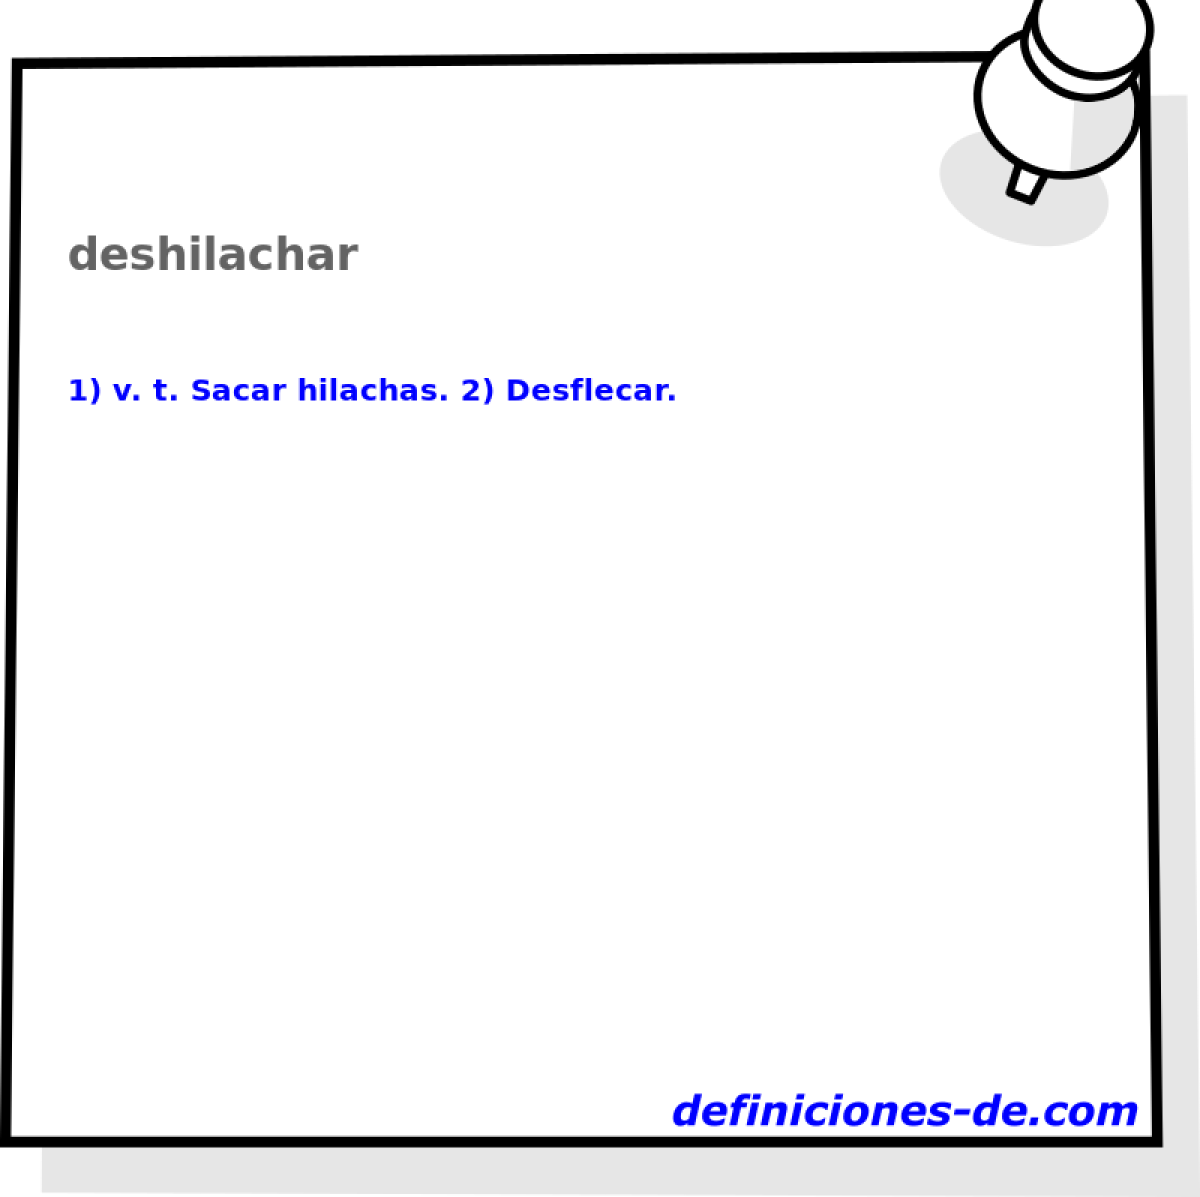 deshilachar 